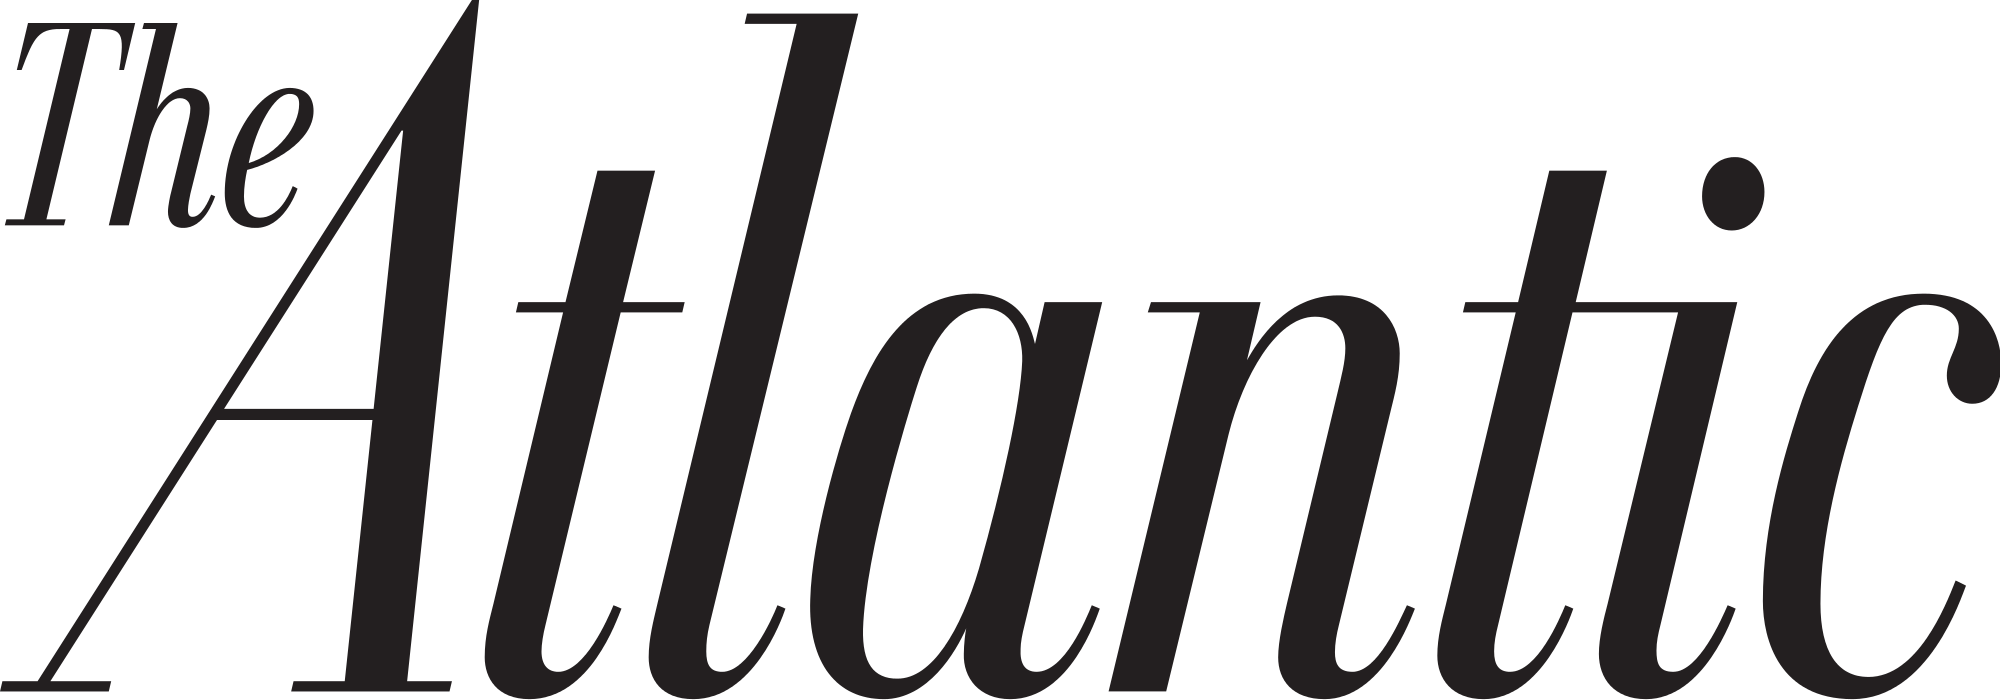 The_Atlantic_magazine_logo.svg.png